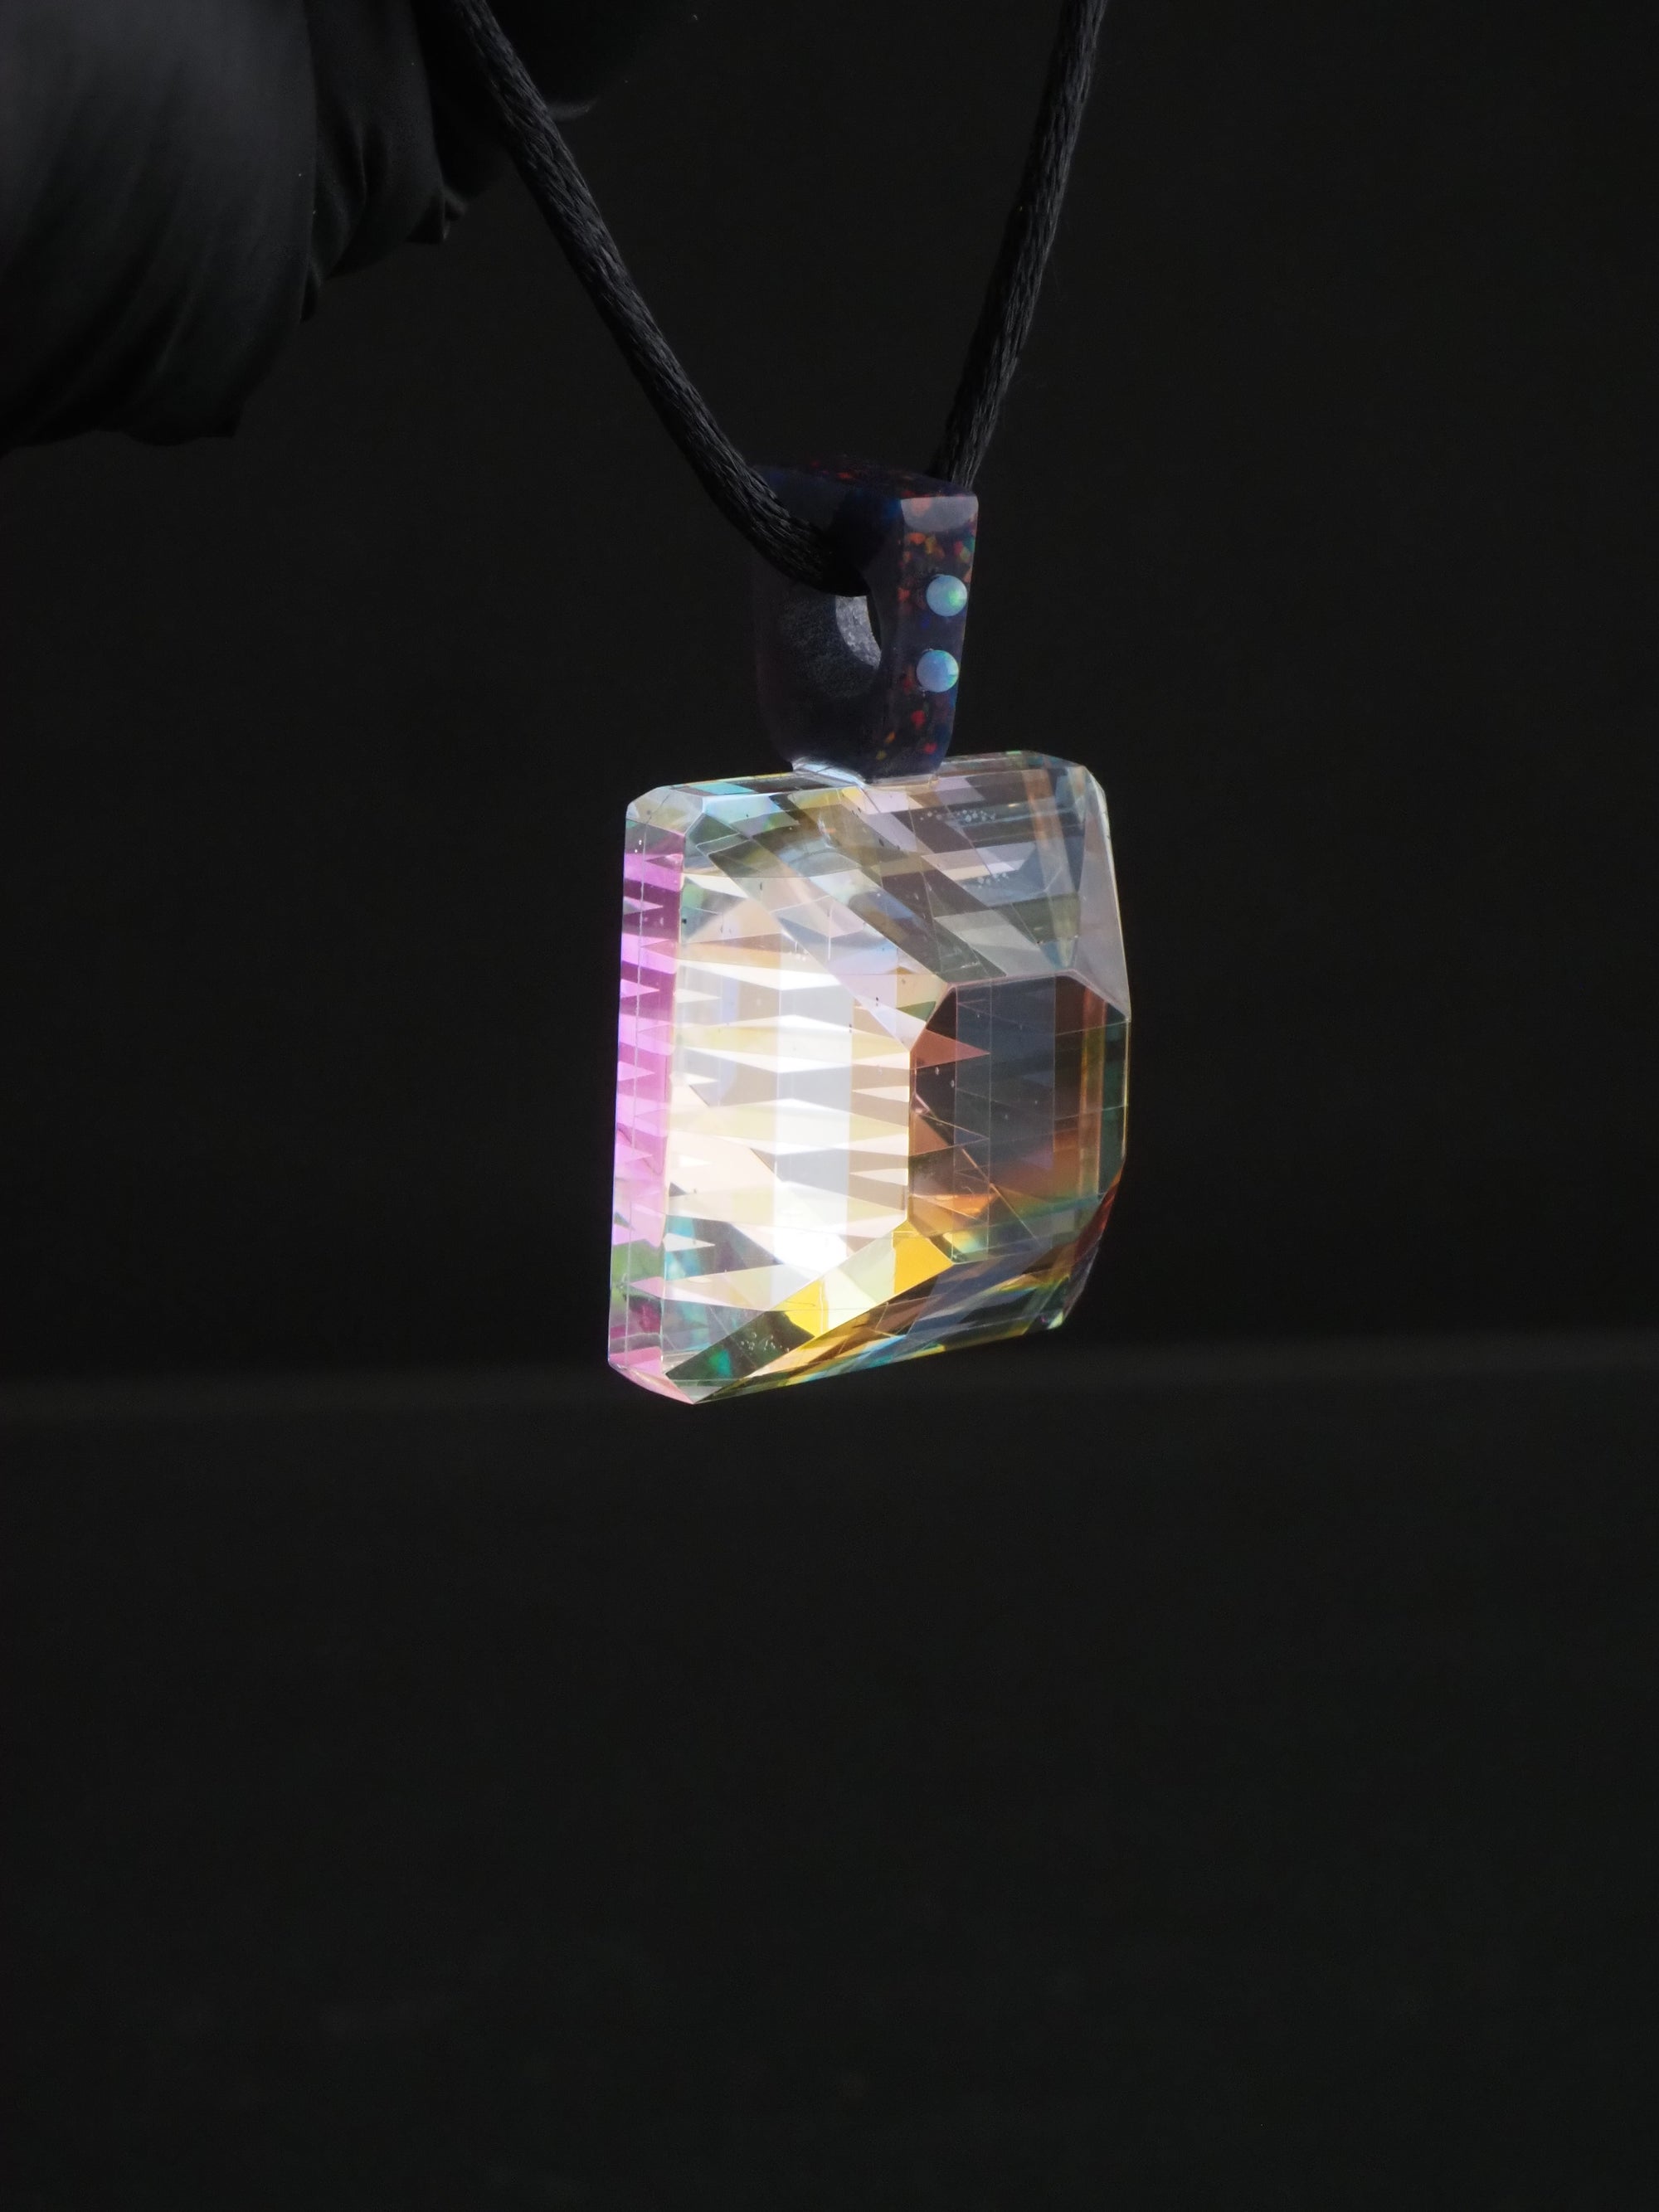 Brilliant Cuts "Prism Pendant"